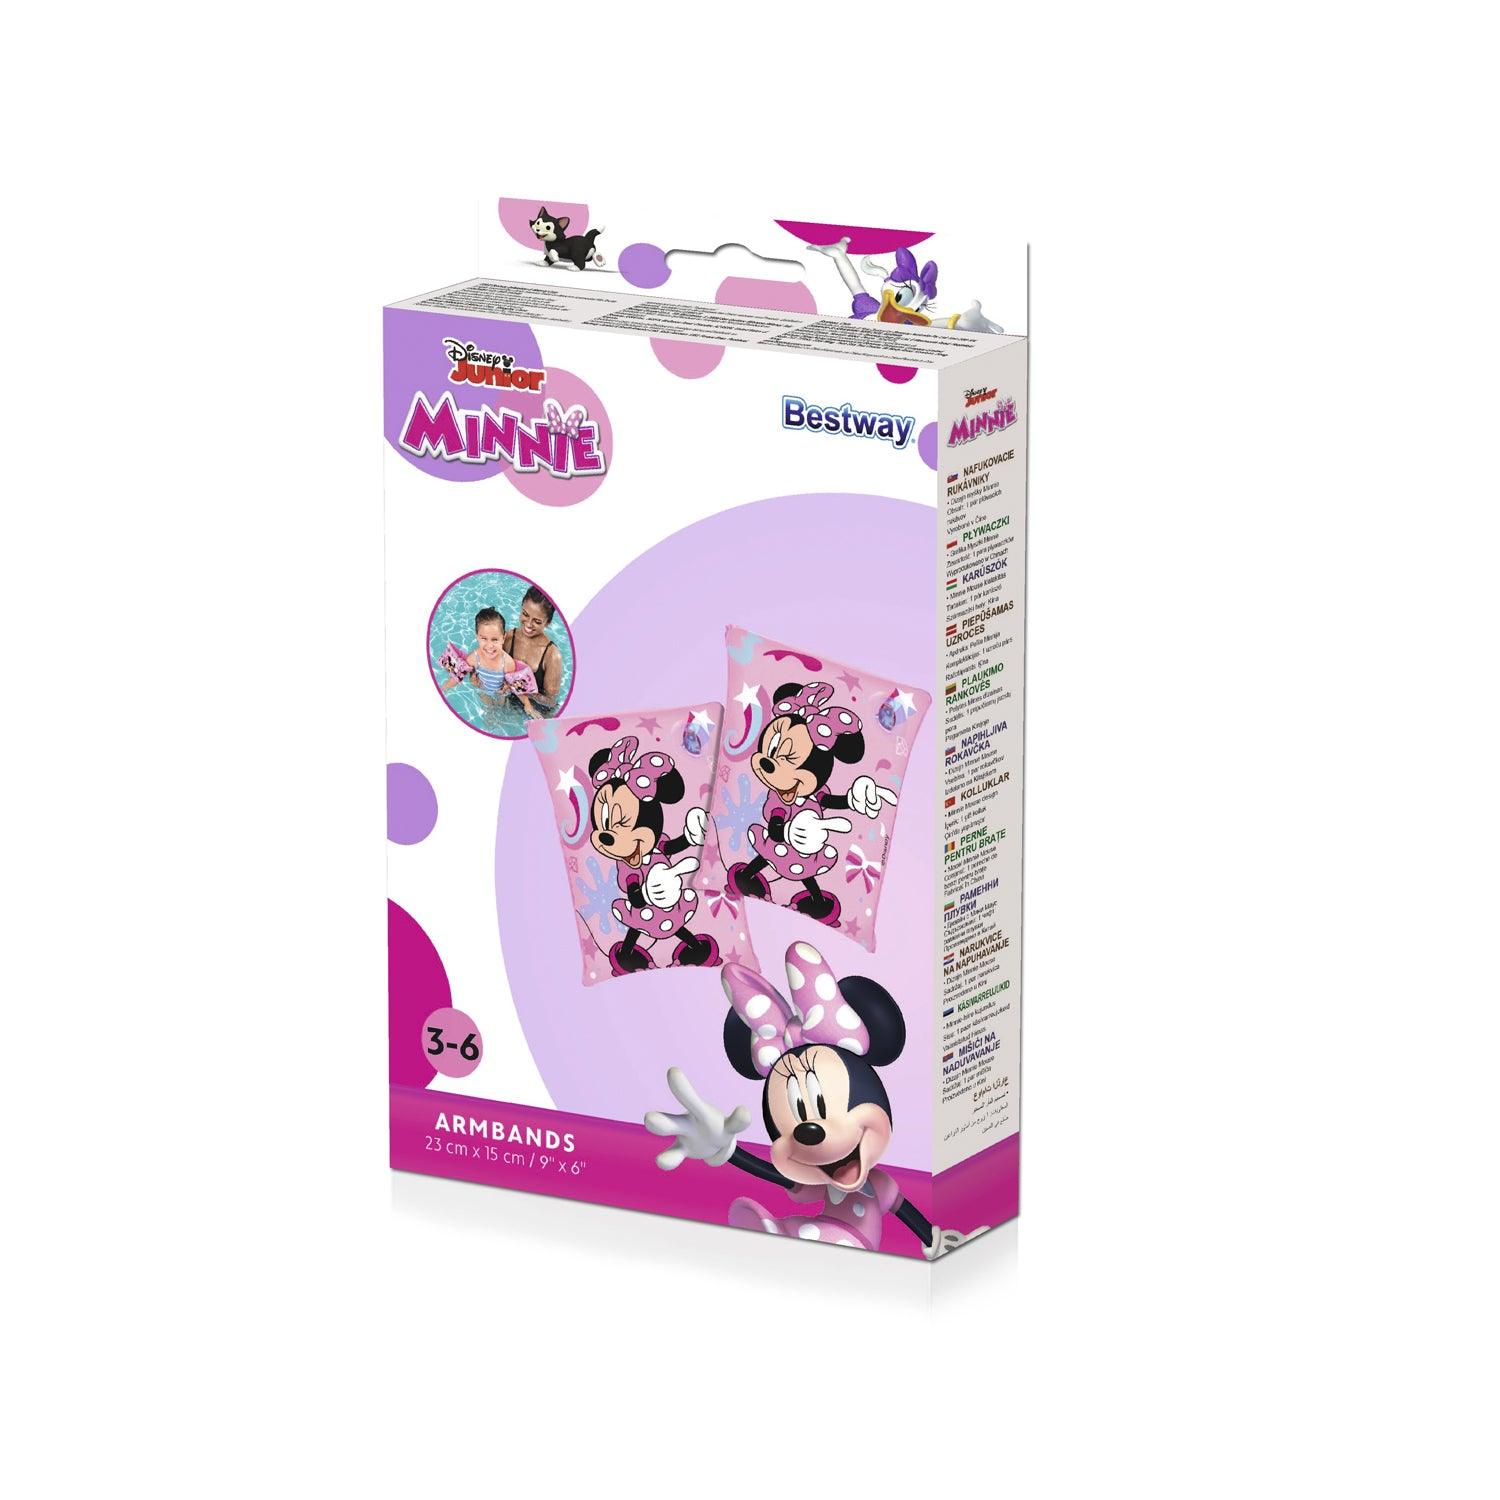 Bestway Disney Junior® armbands 3-6 years Minnie Mouse - Ourkids - Bestway